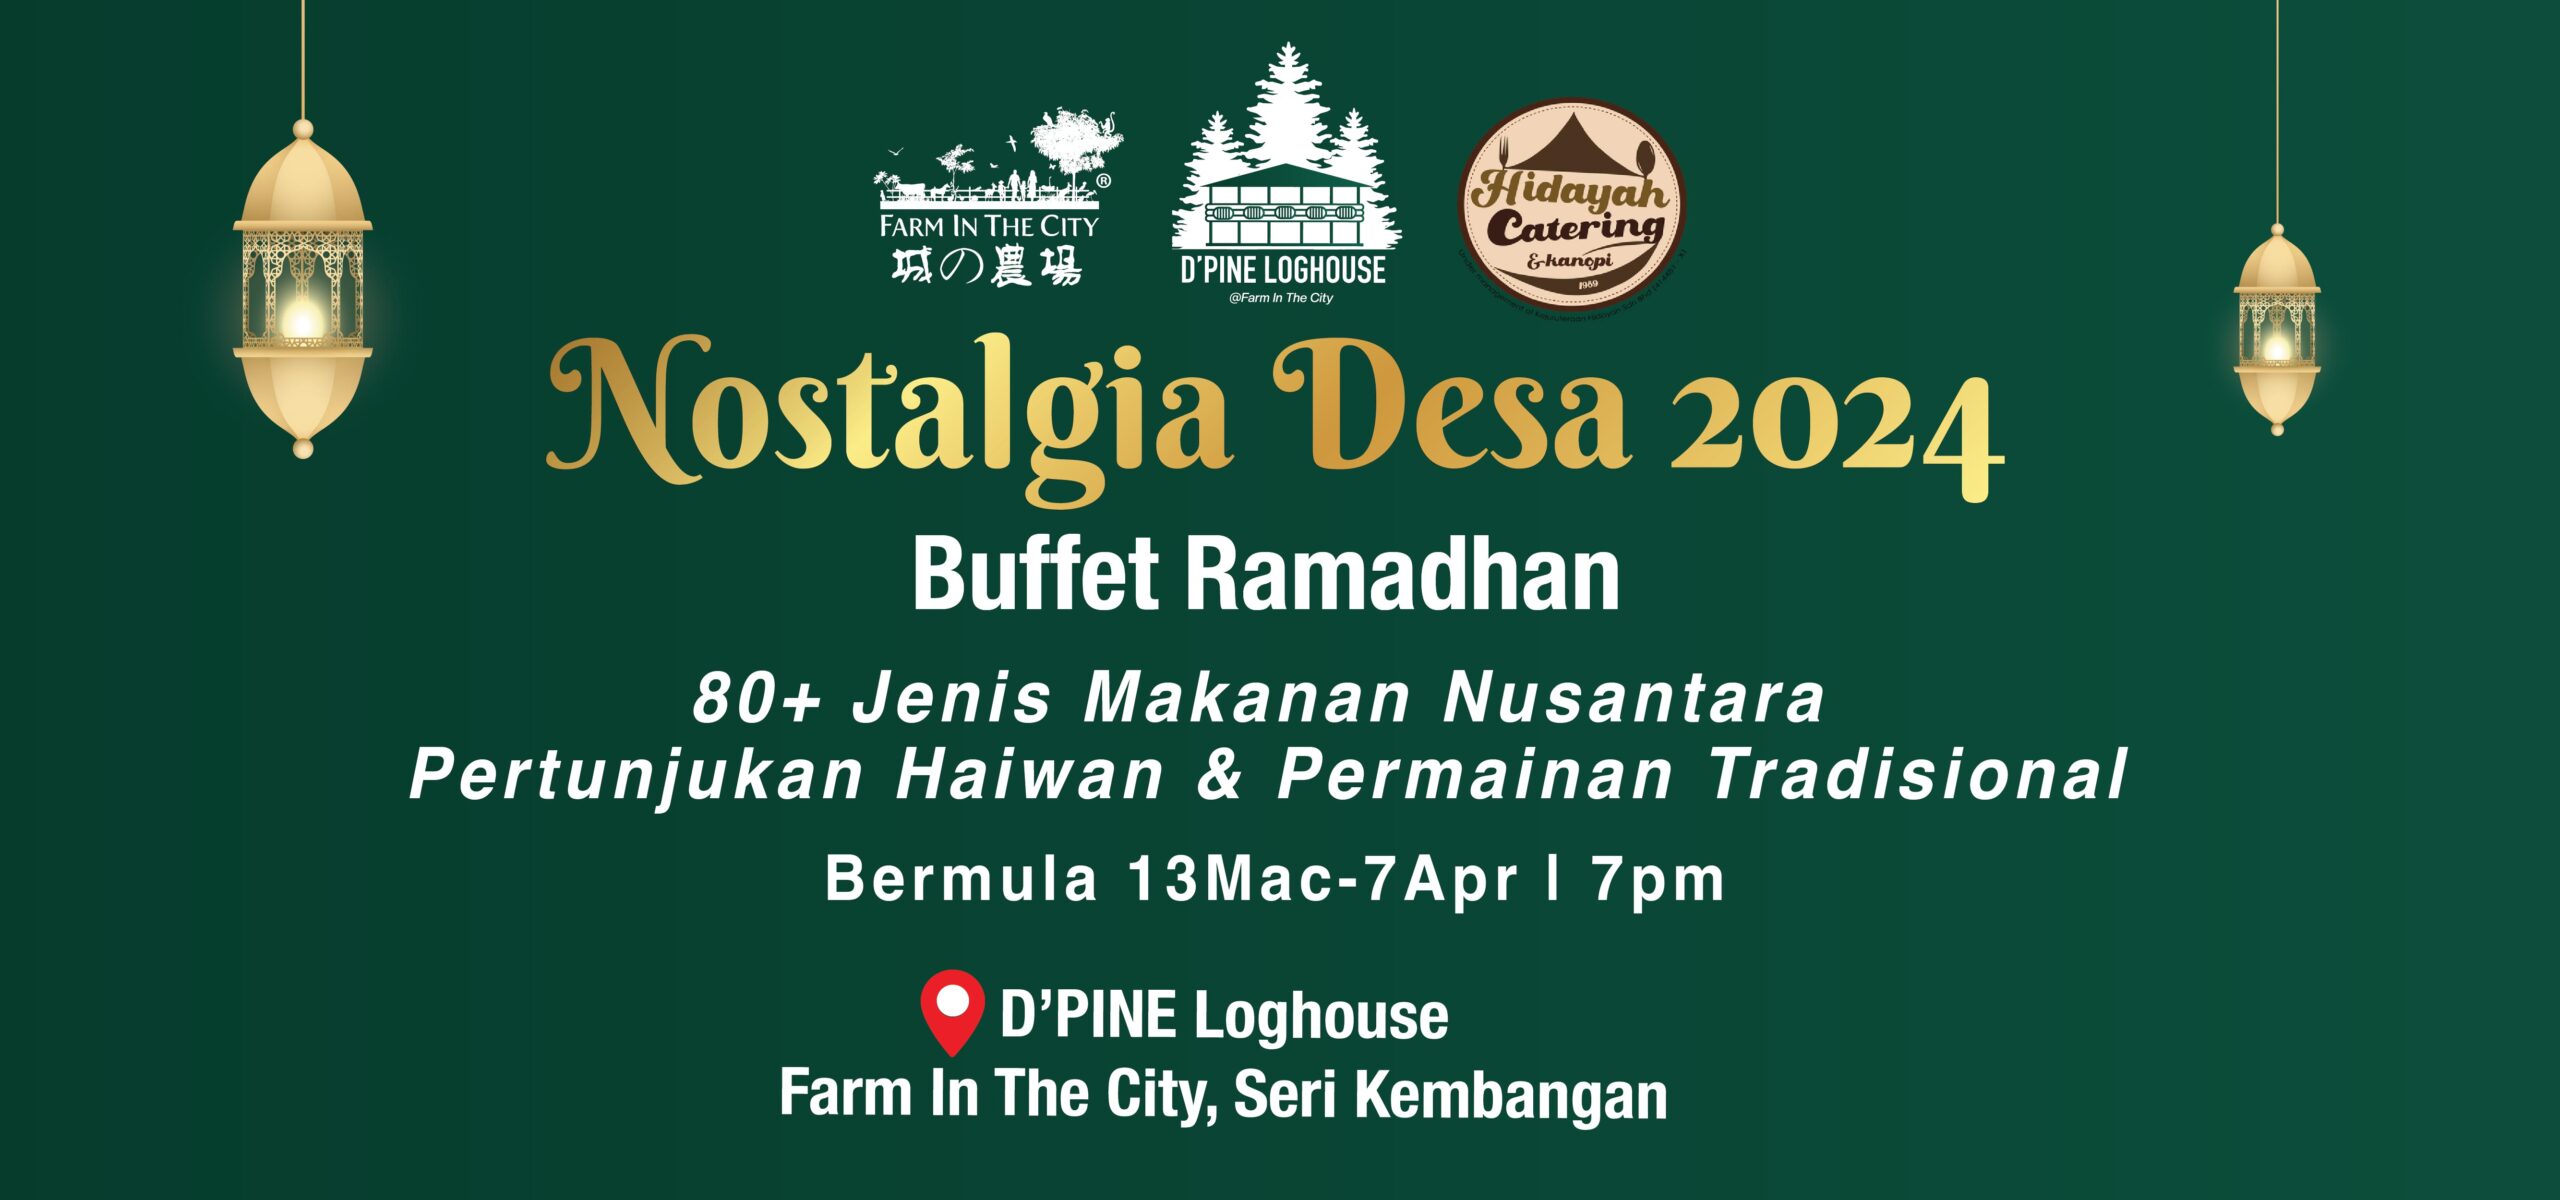 🌙 Dive into Nostalgia Desa Iftar Buffet Ramadan at Farm in the City! 🌙